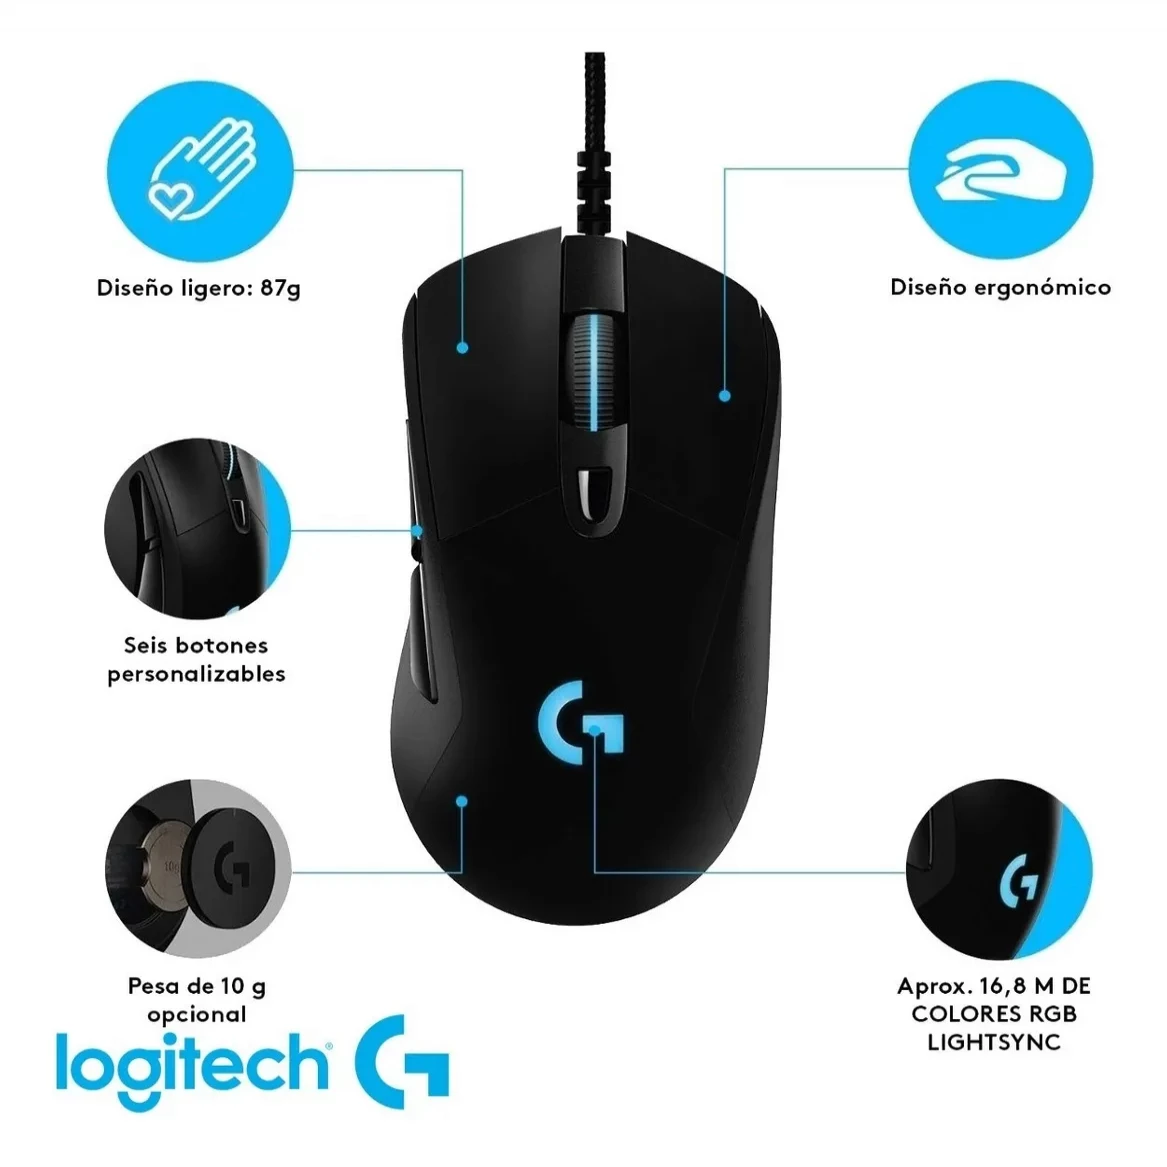 Mouse Logitech G403 HERO Gaming USB RGB